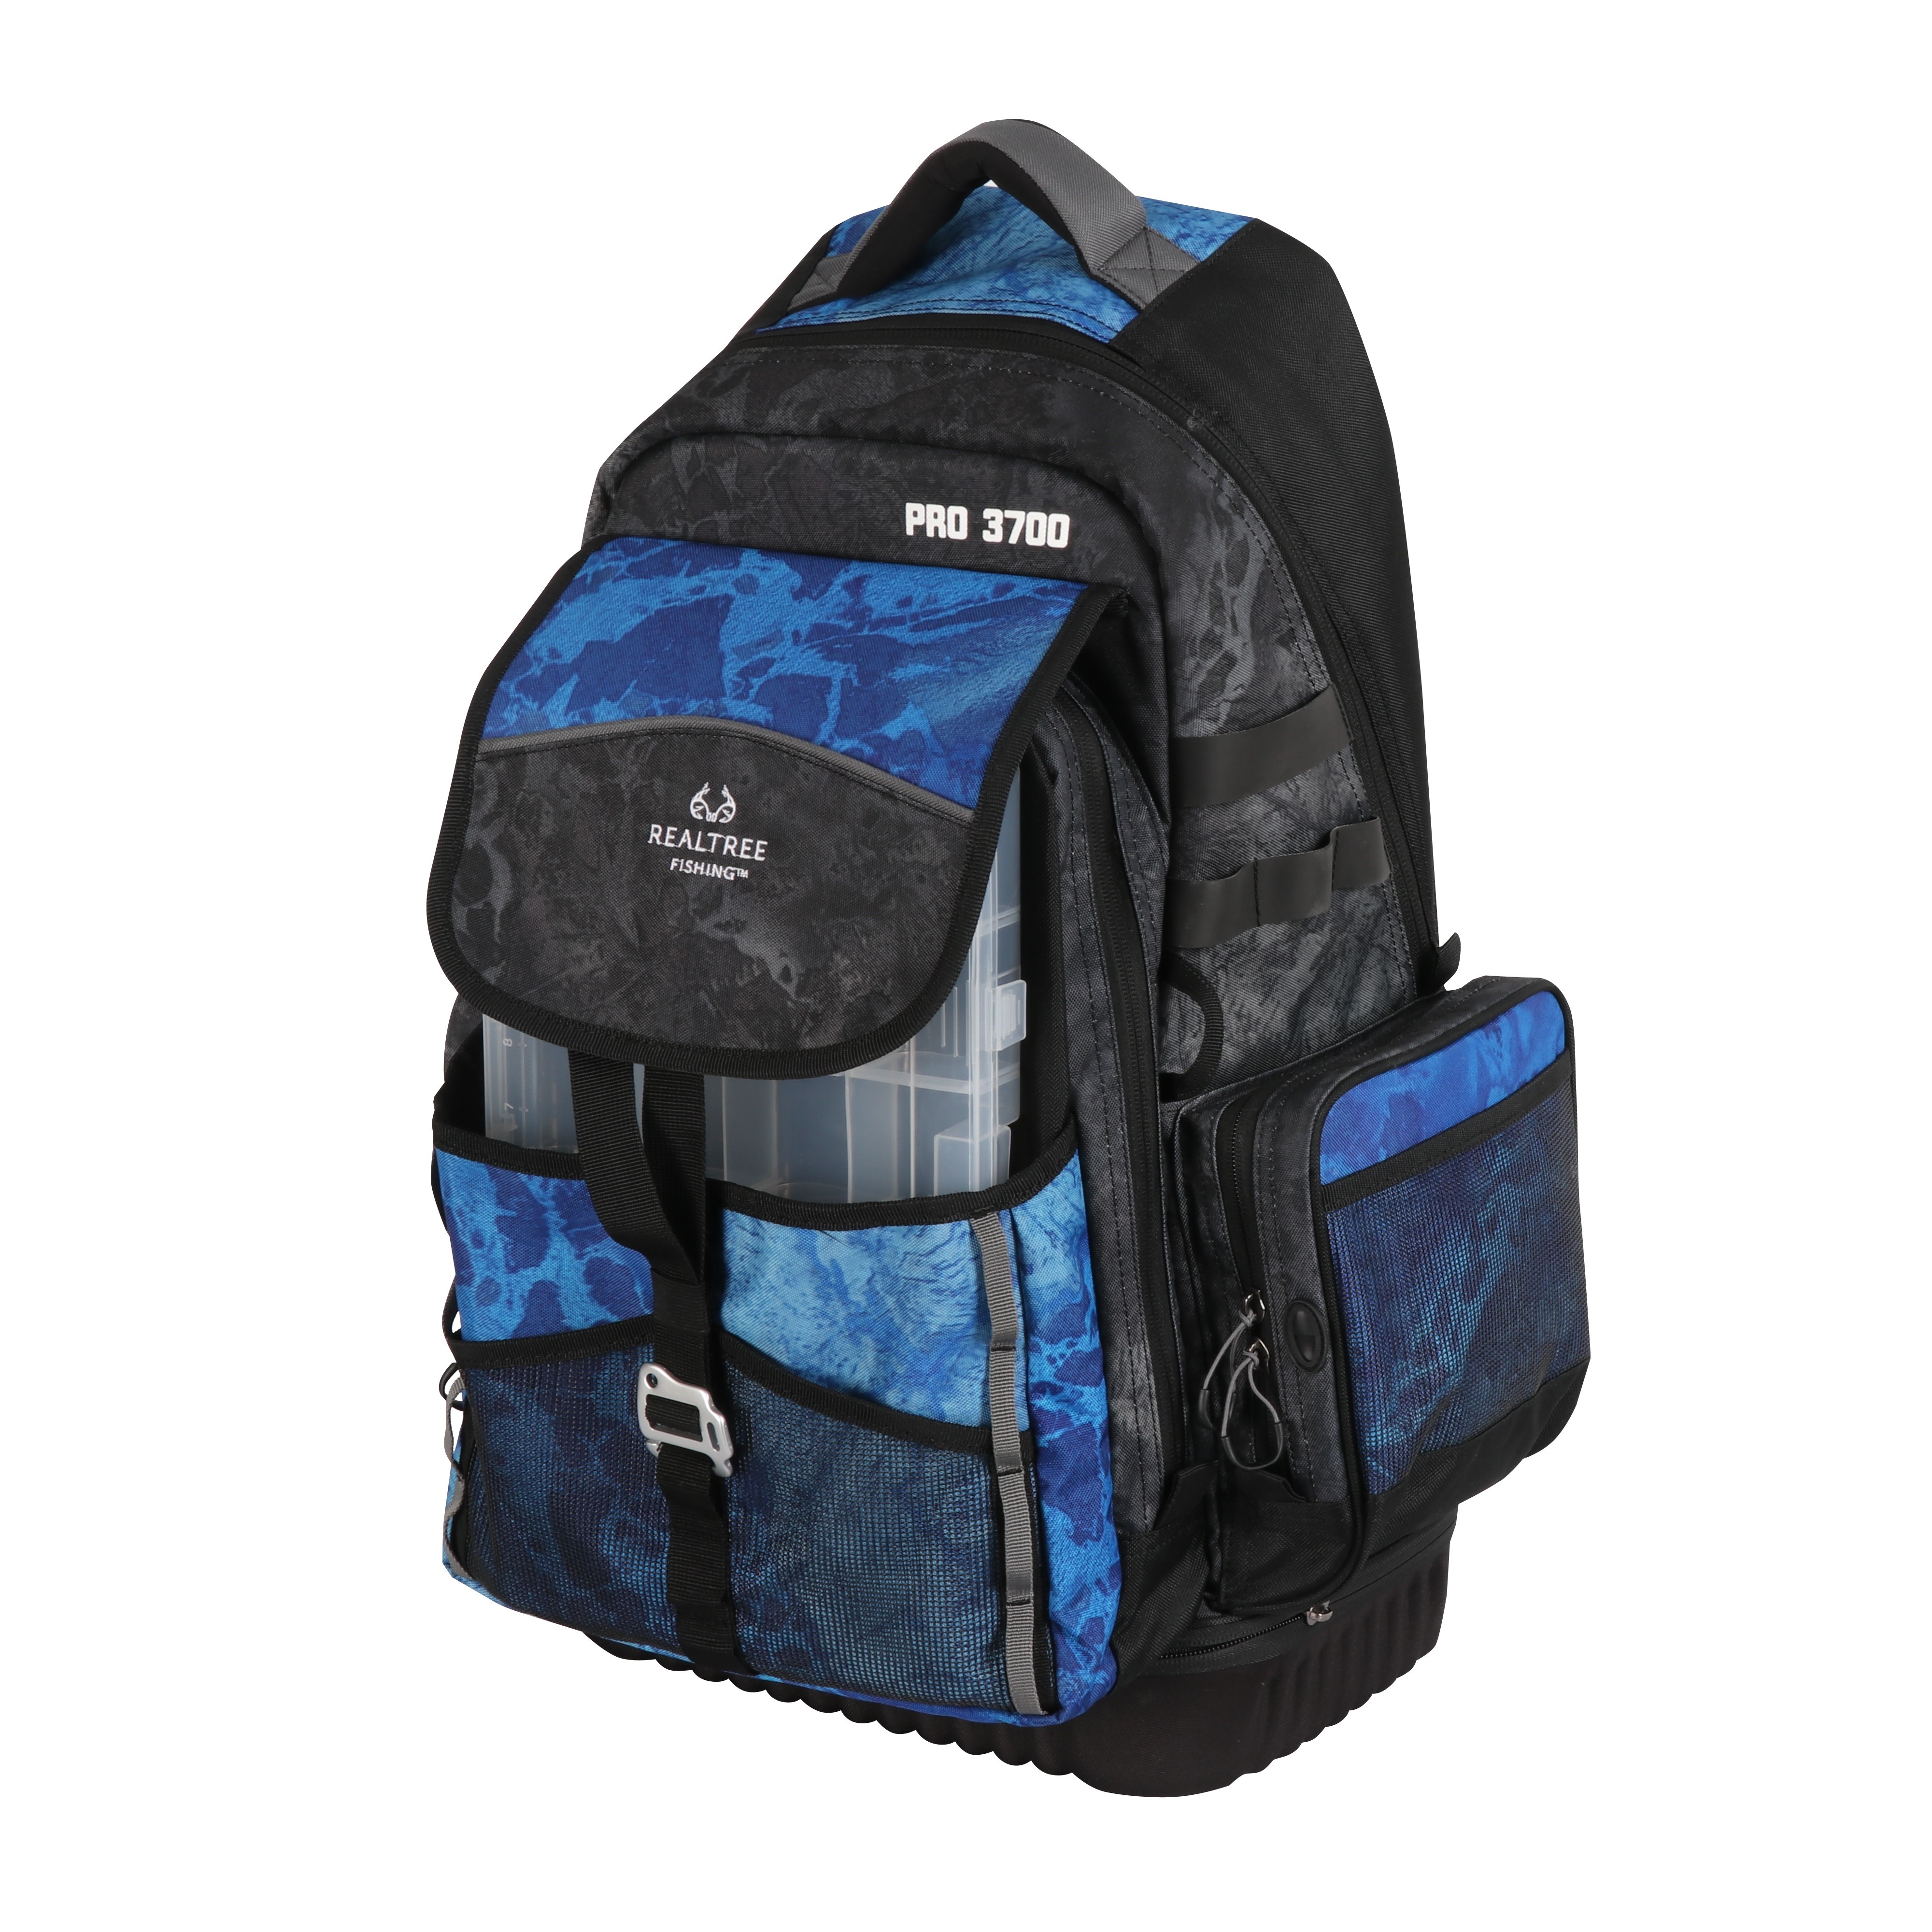 Realtree Large Pro Fishing Tackle Box Storage Backpack, Blue, Adult Unisex, Polyester - image 1 of 8